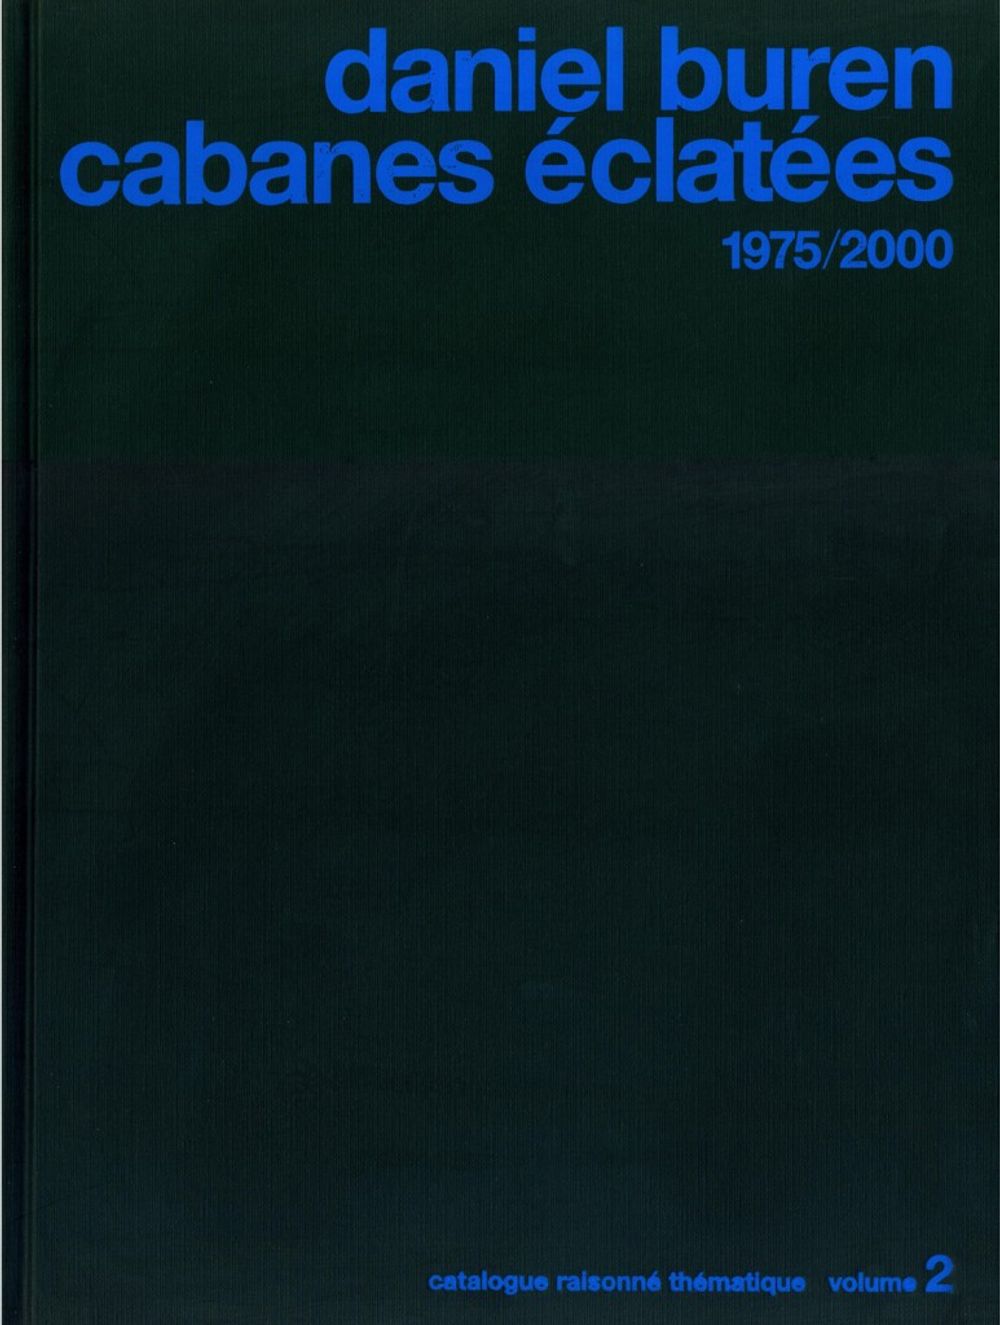 Book cover on plain gray background with title of Daniel Buren cabanes éclatées 1975/2000